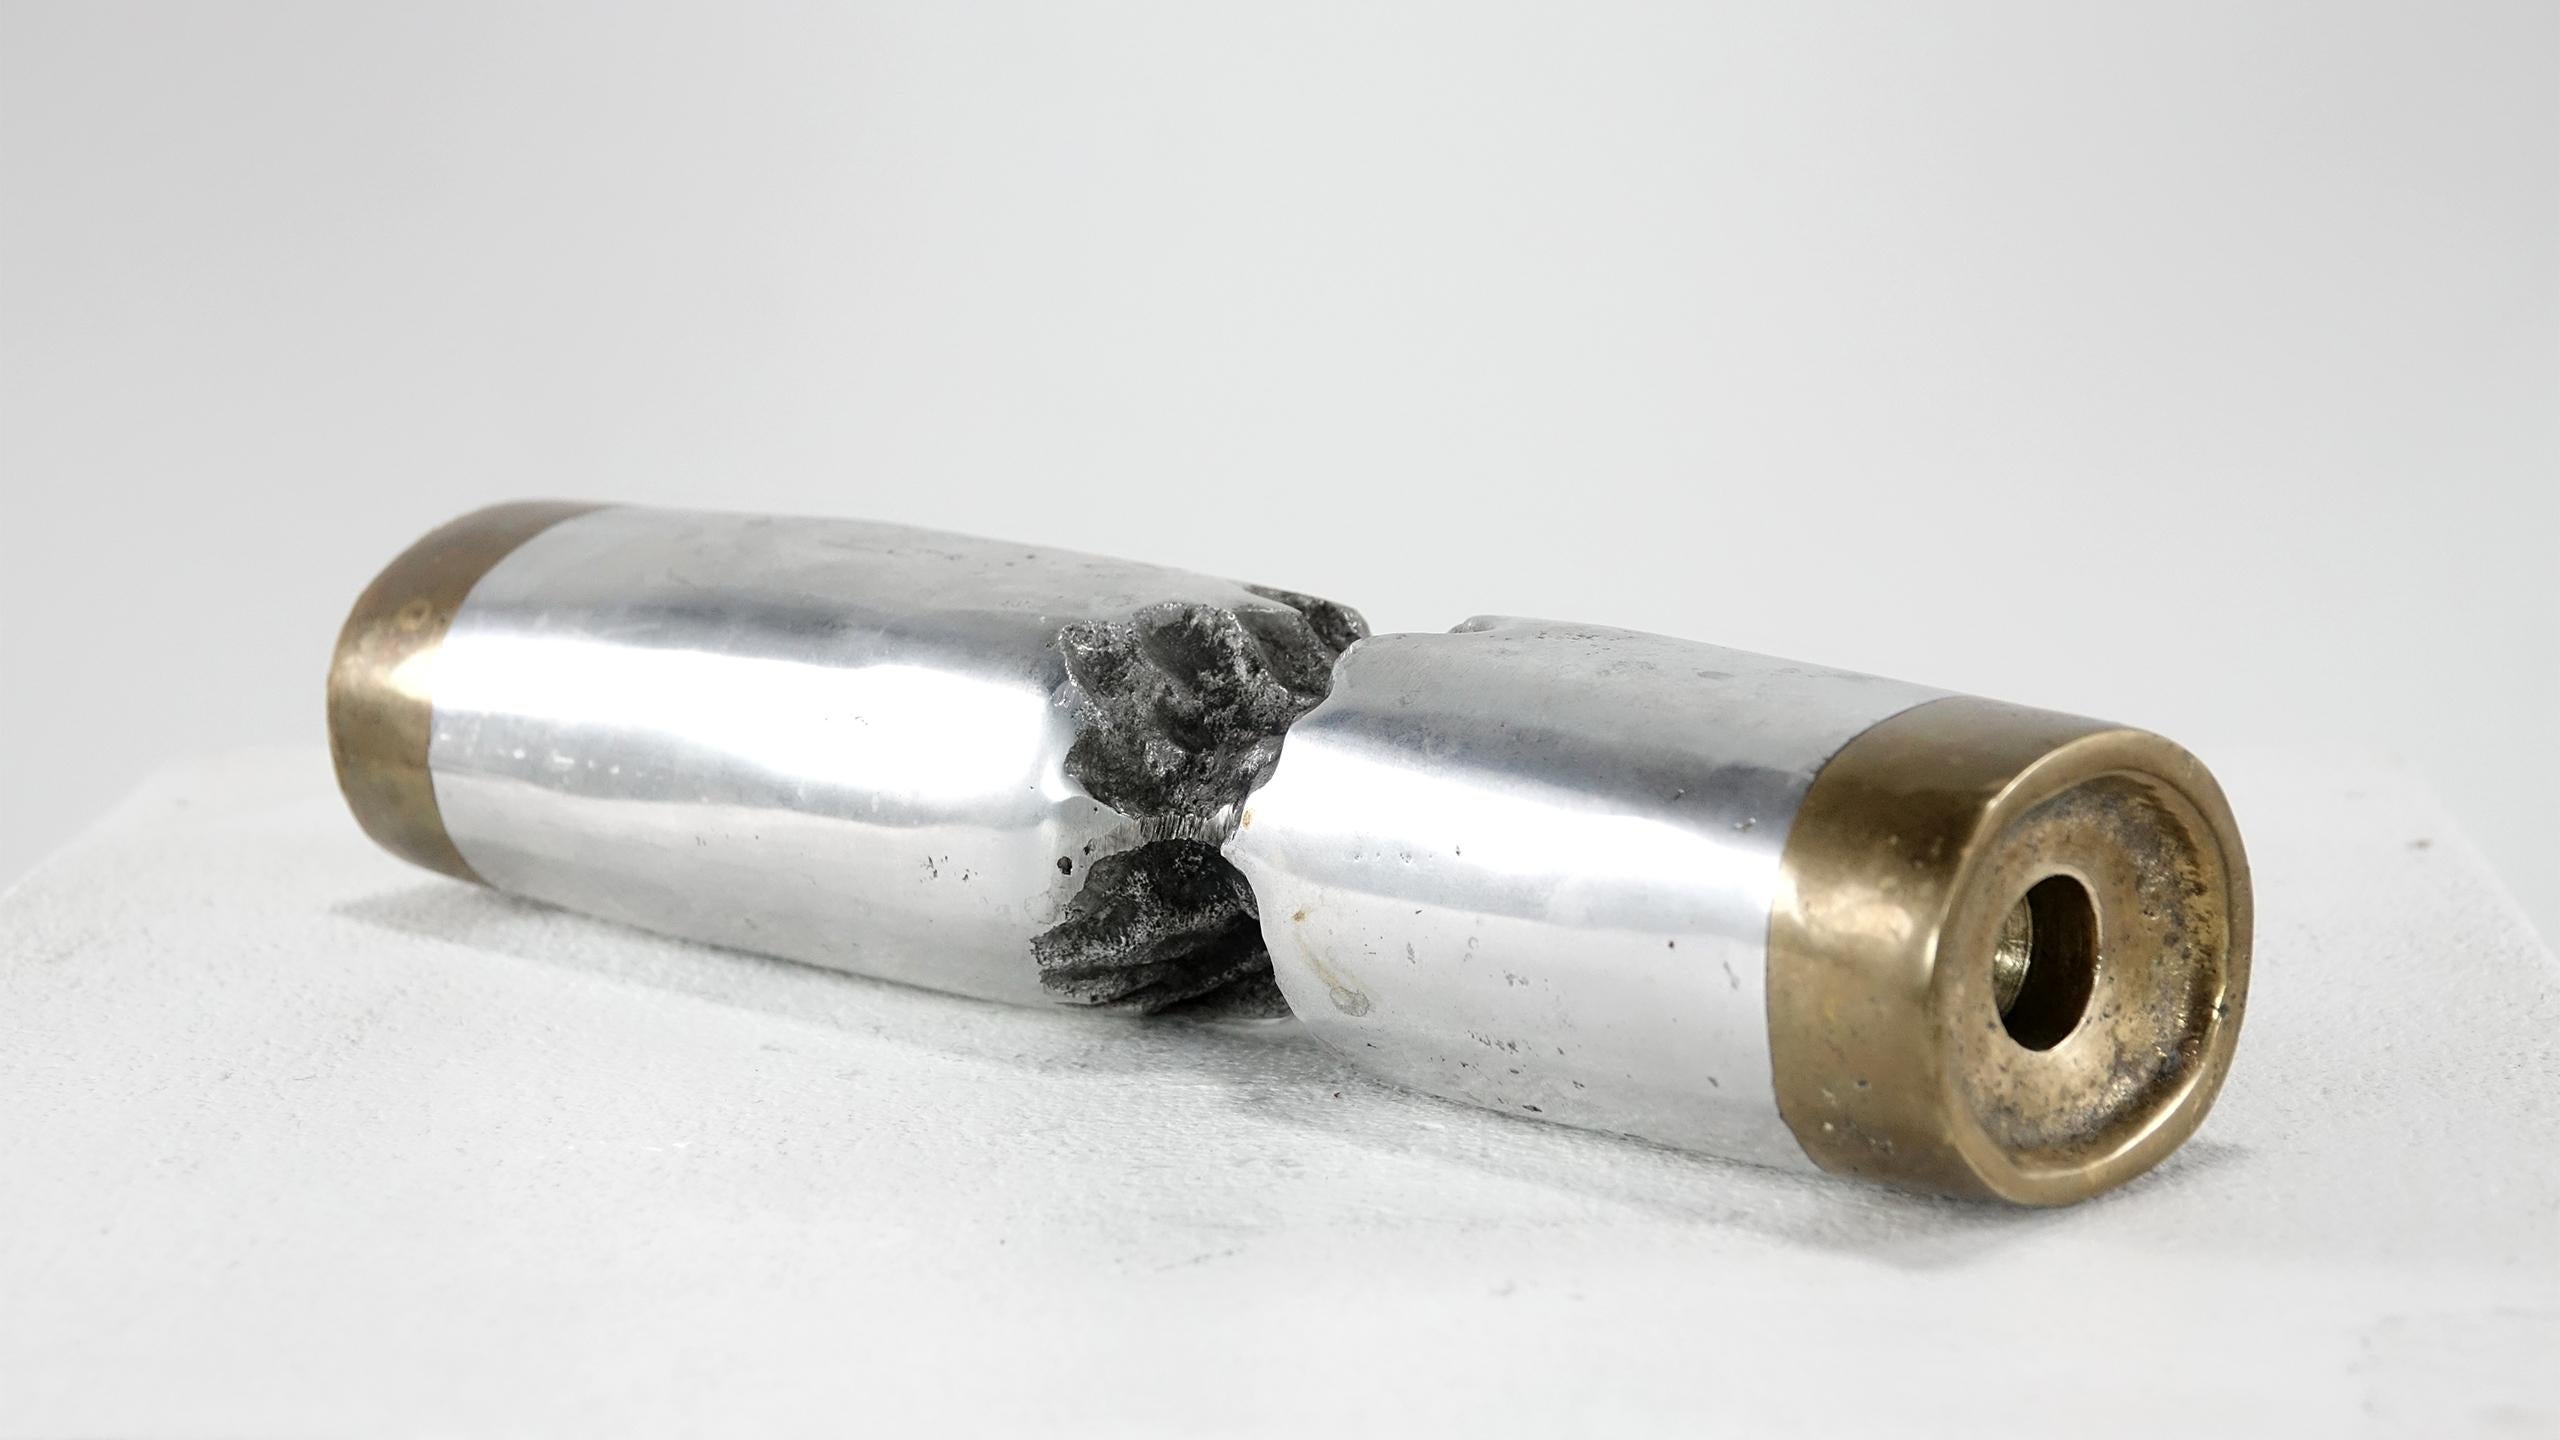 David Marshall Desenos Brutalist Aluminum and Brass Candlestick 1